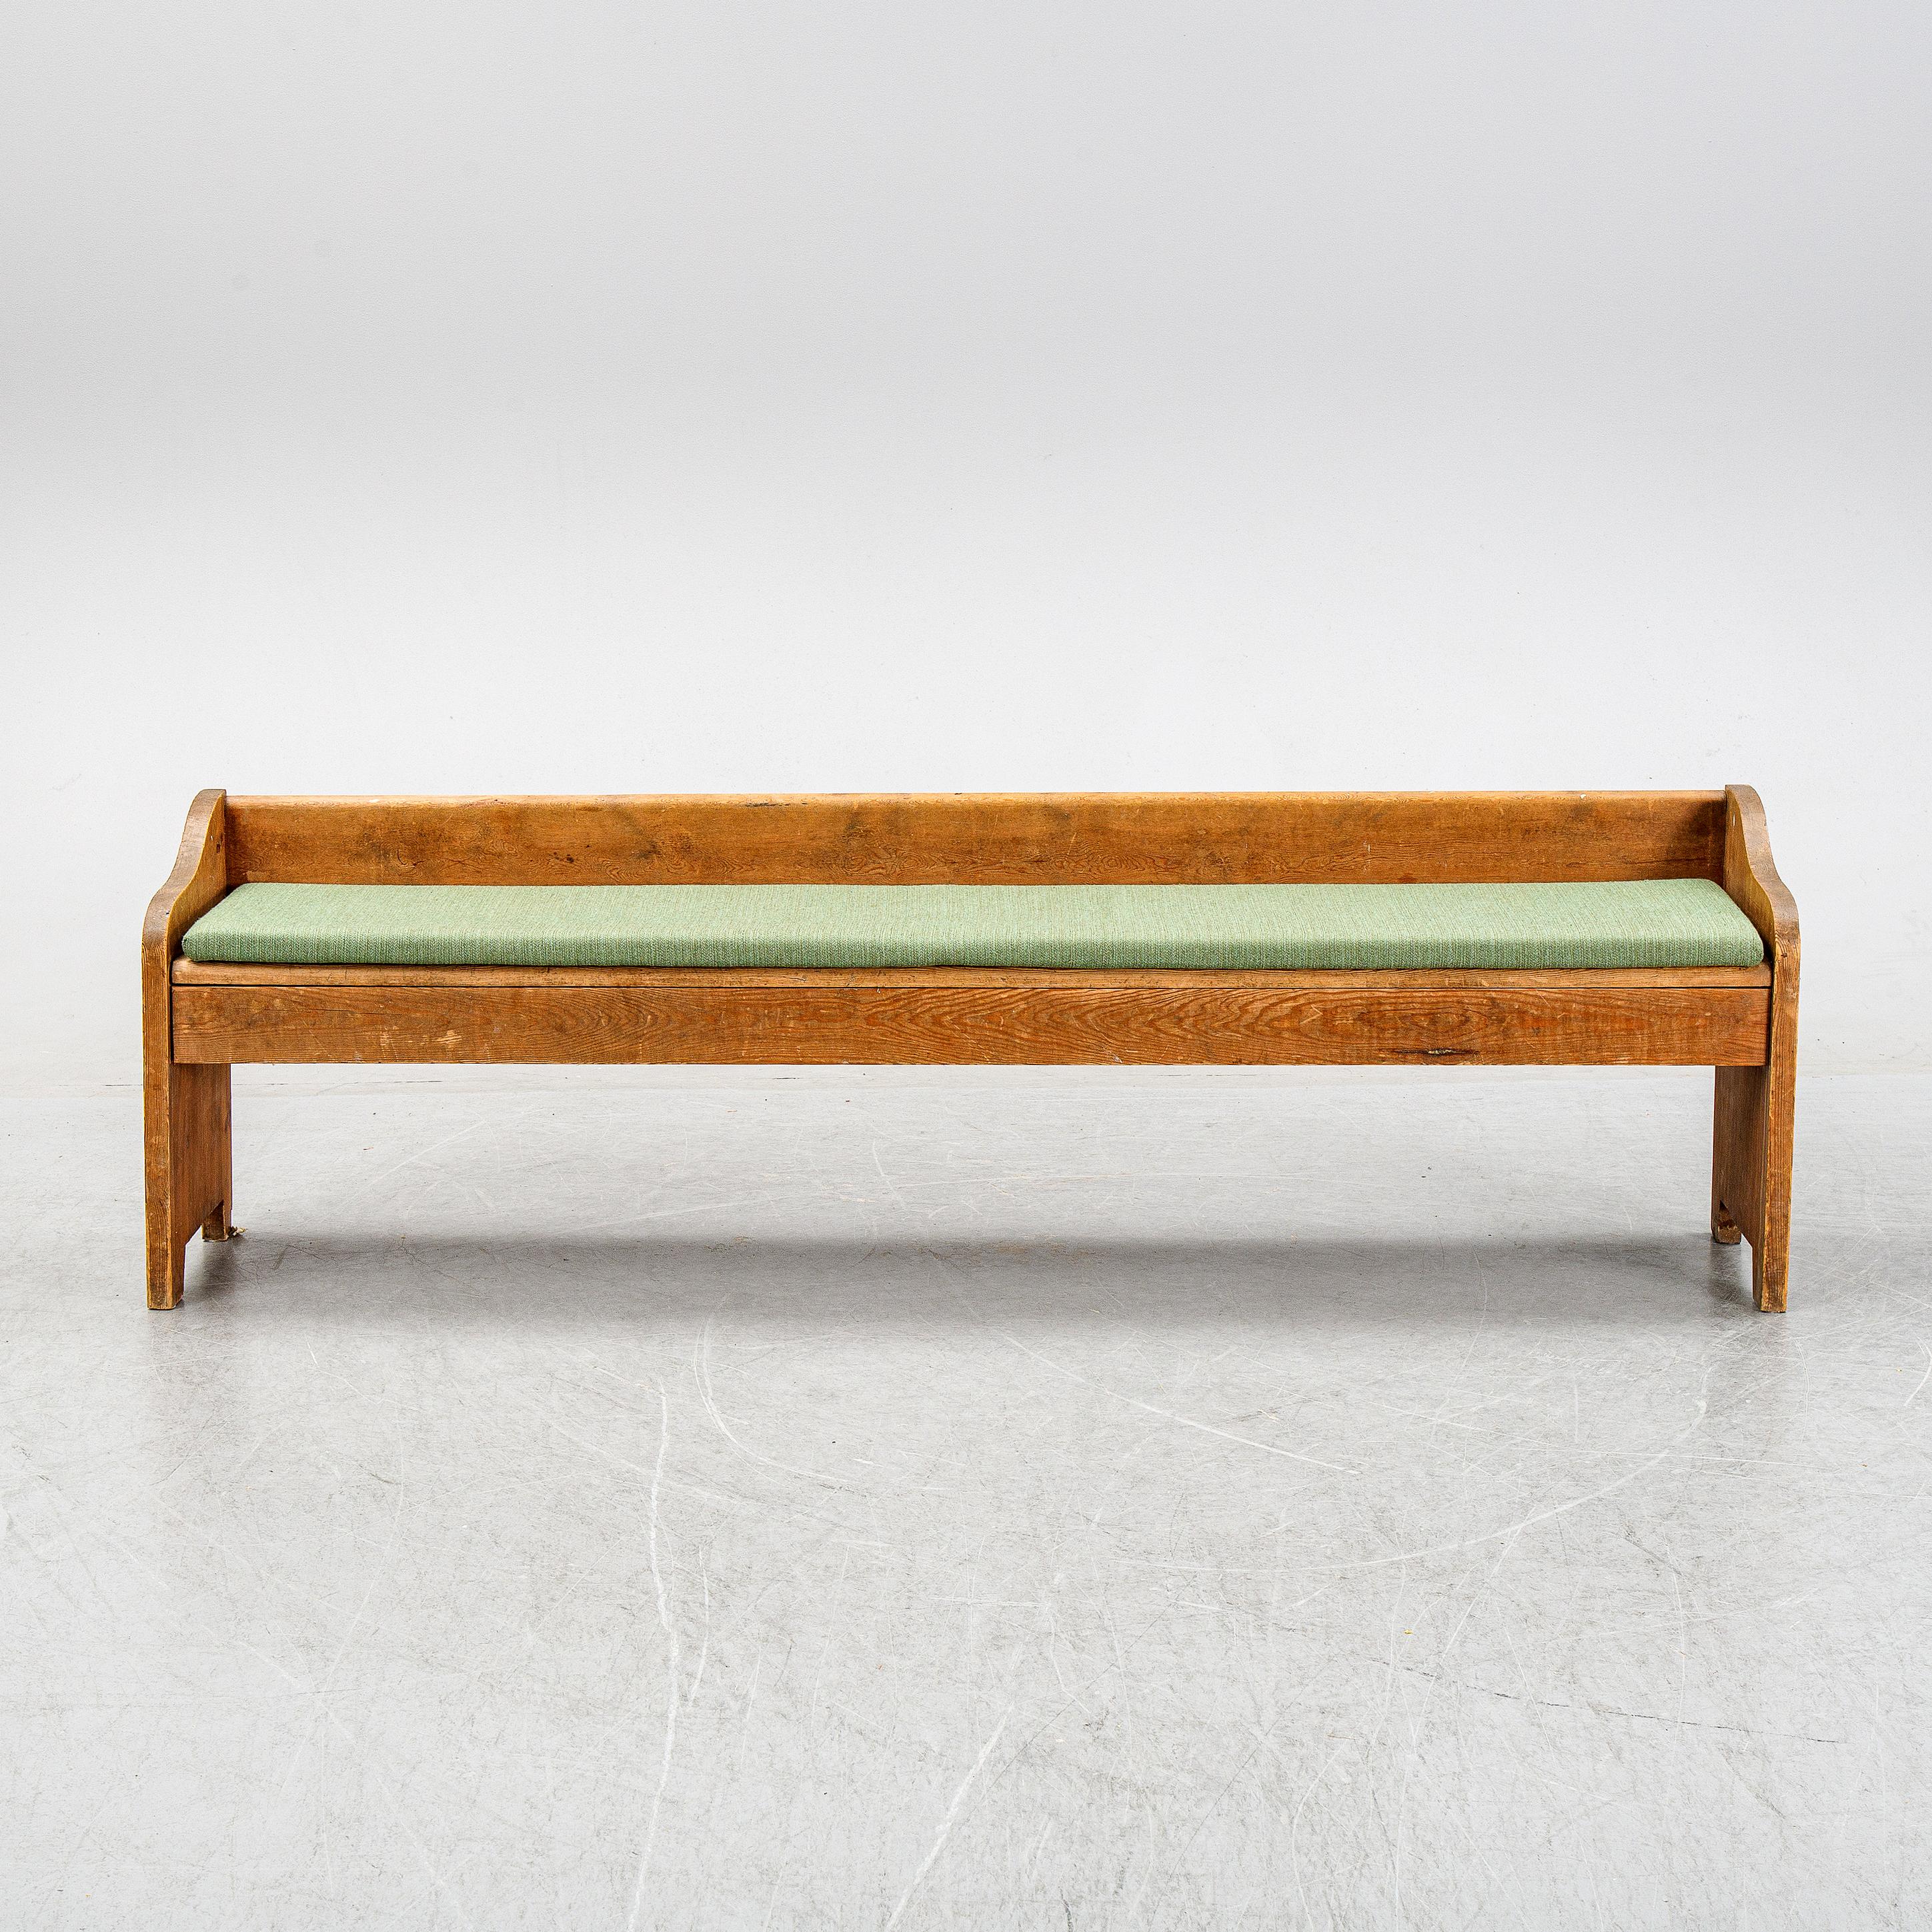 Scandinavian Modern Swedish Pine Sofa in style of Axel Einar Hjorth Produced in Sweden 1930s